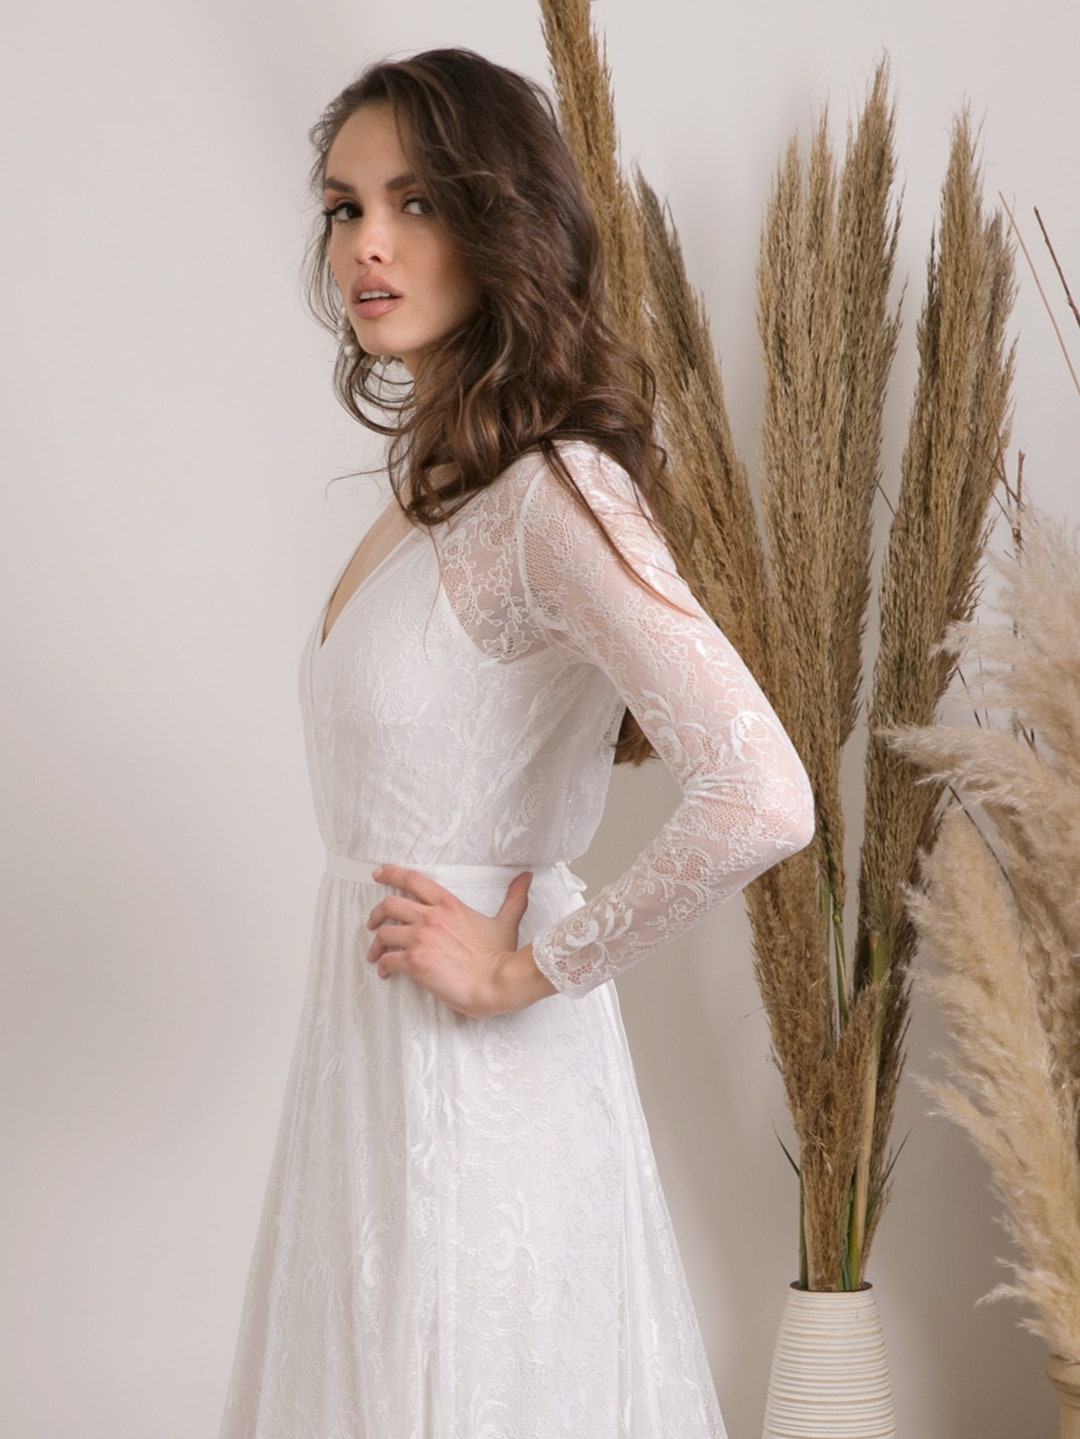 WEDDING DRESS All Lace White Wedding Dress Long Sleeves - Etsy